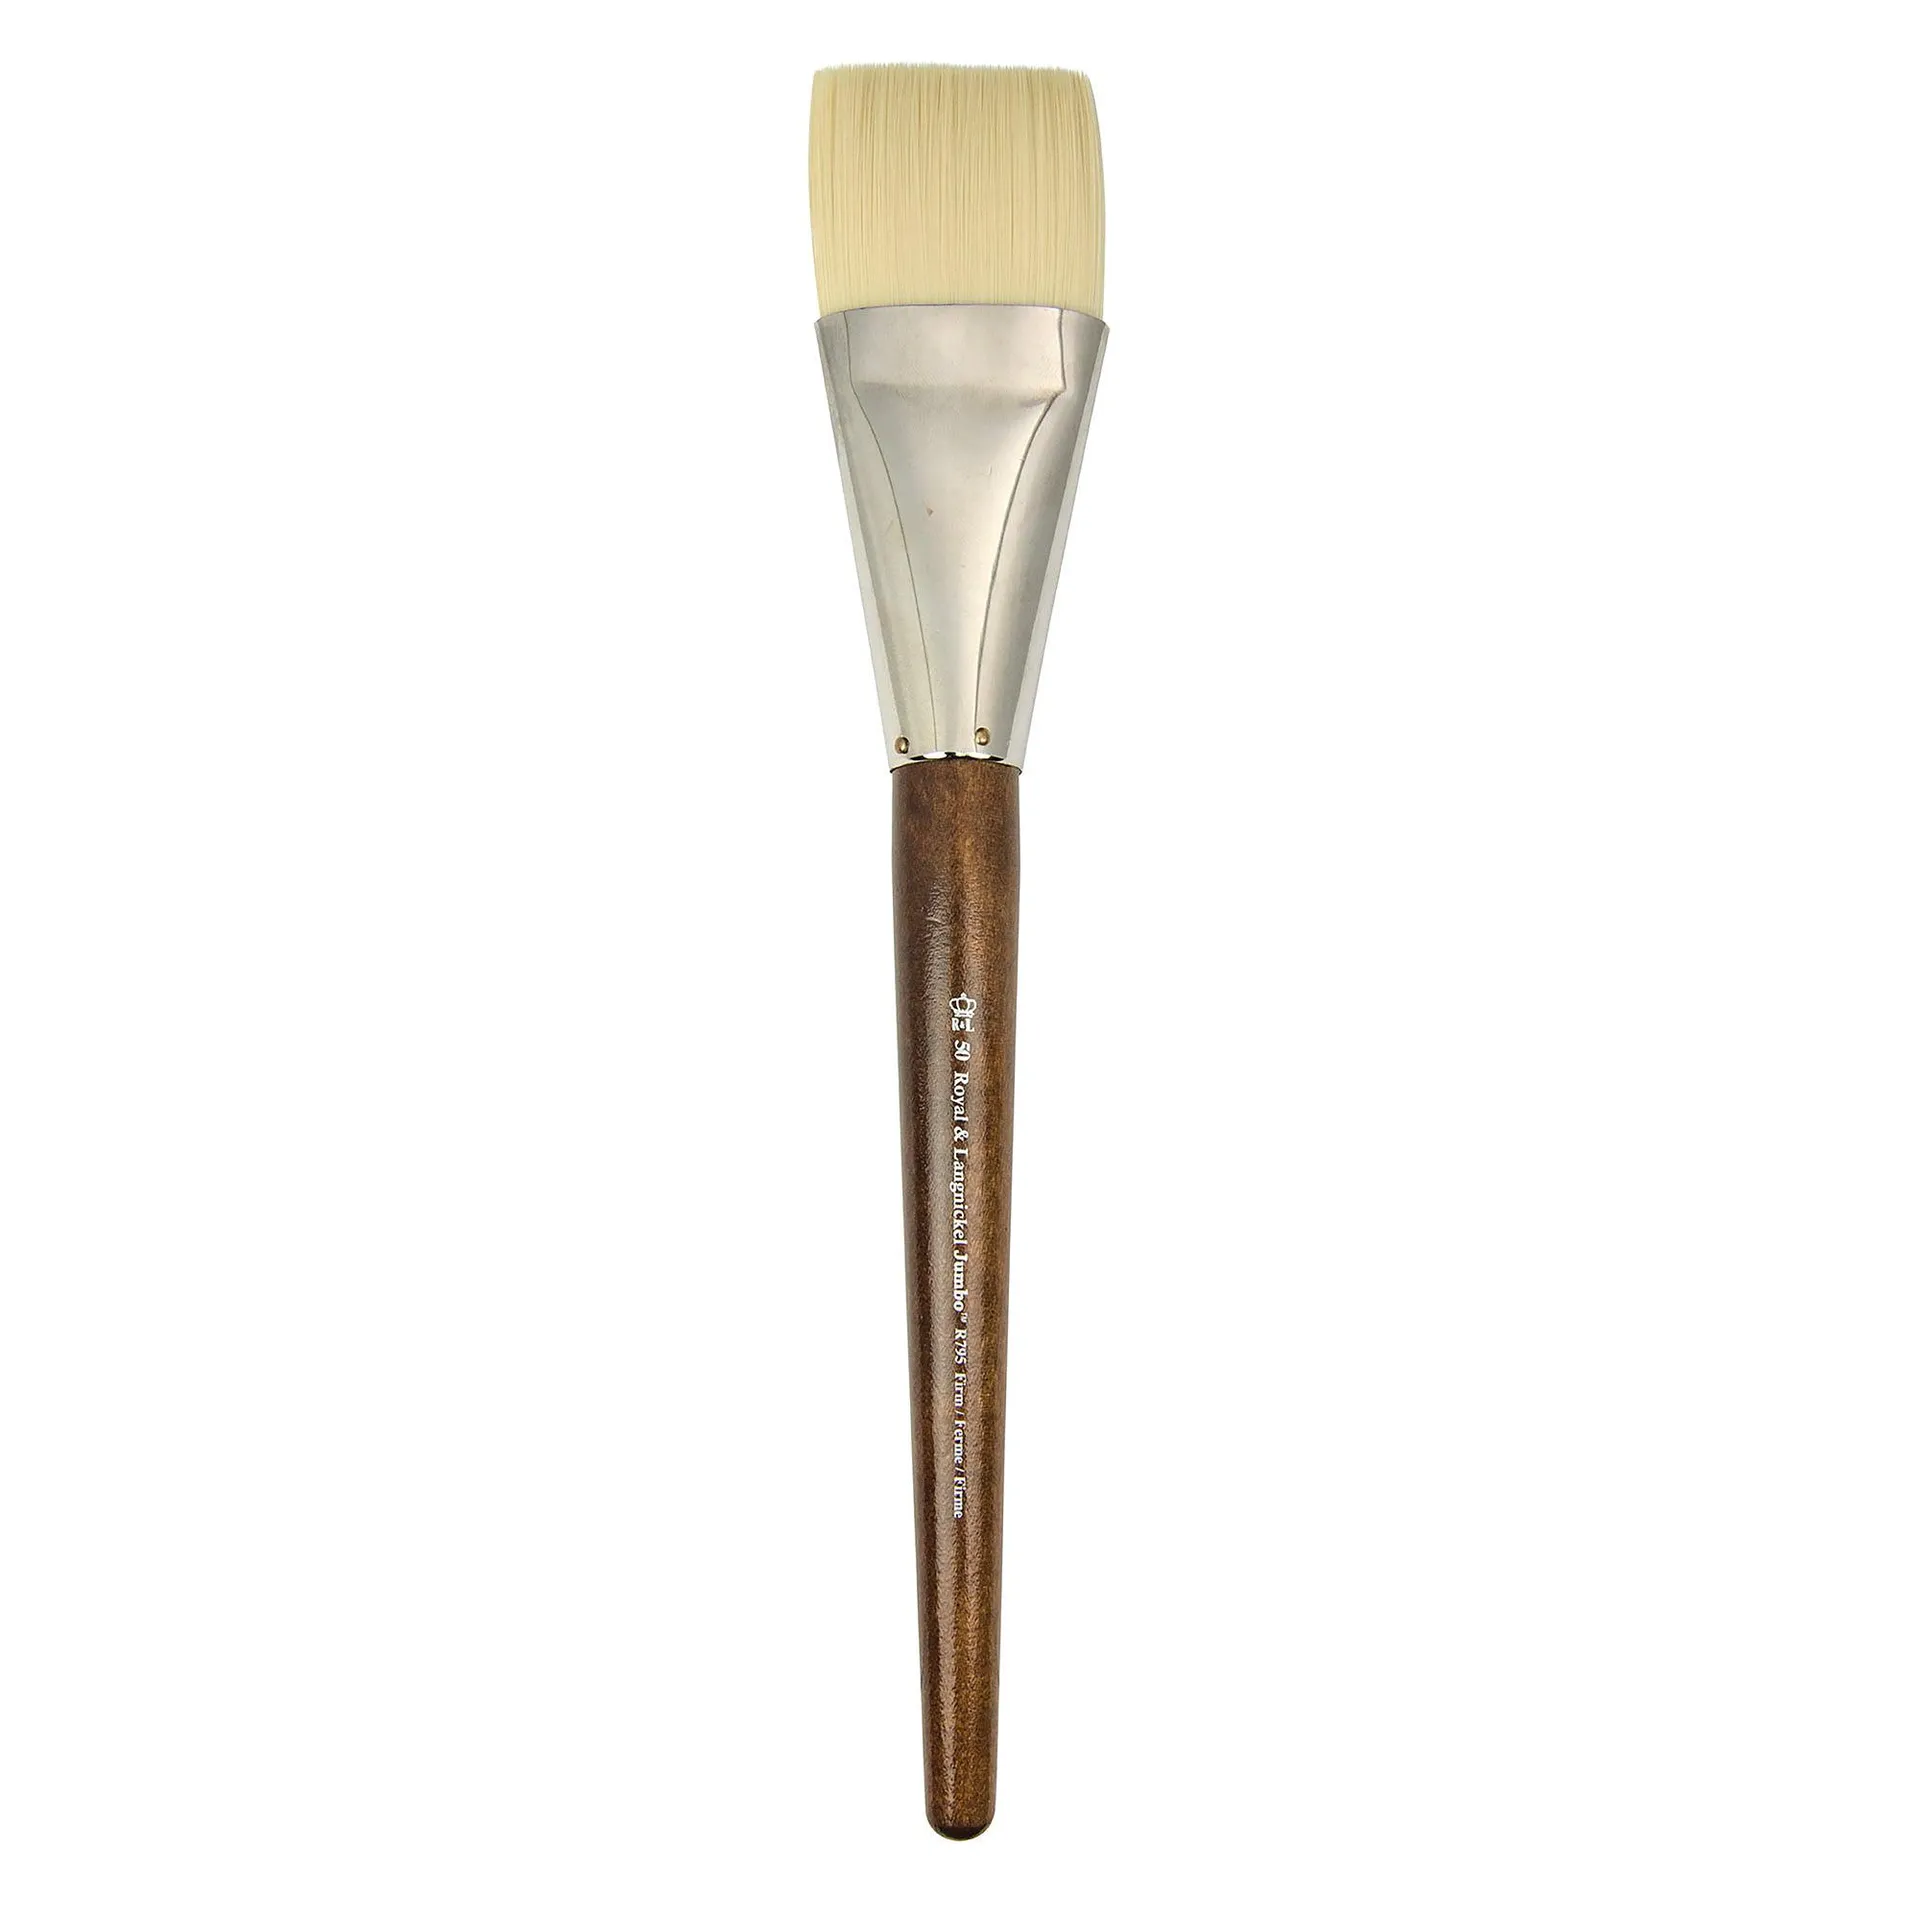 Jumbo Brown Paintbrush - Filbert